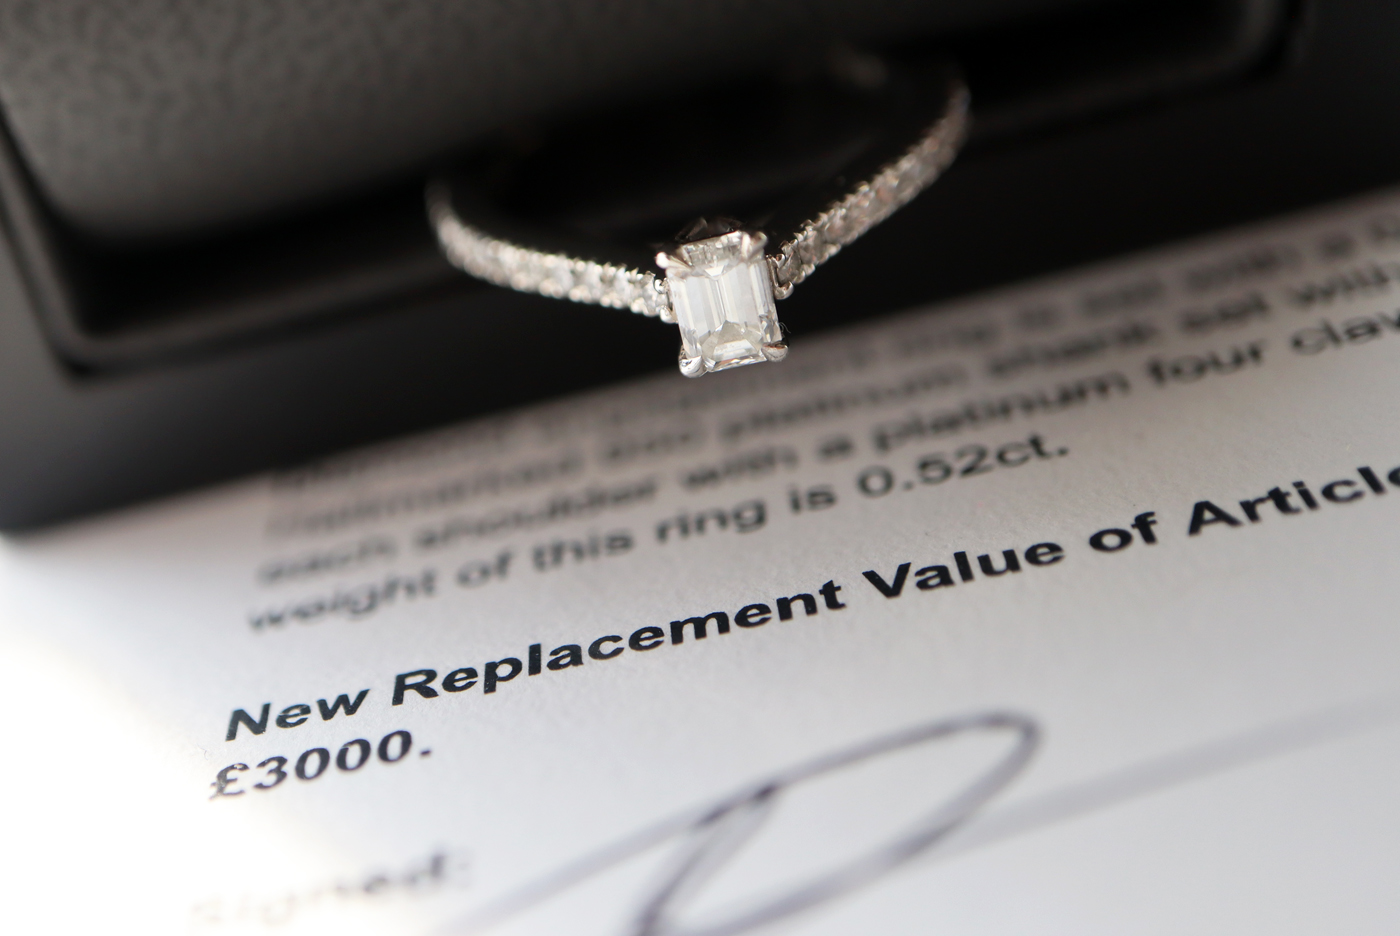 VS / G DIAMOND & PLATINUM EMERALD CUT DIAMOND RING - CERTIFICATE & VALUATION (£3,000.00) - Image 3 of 11